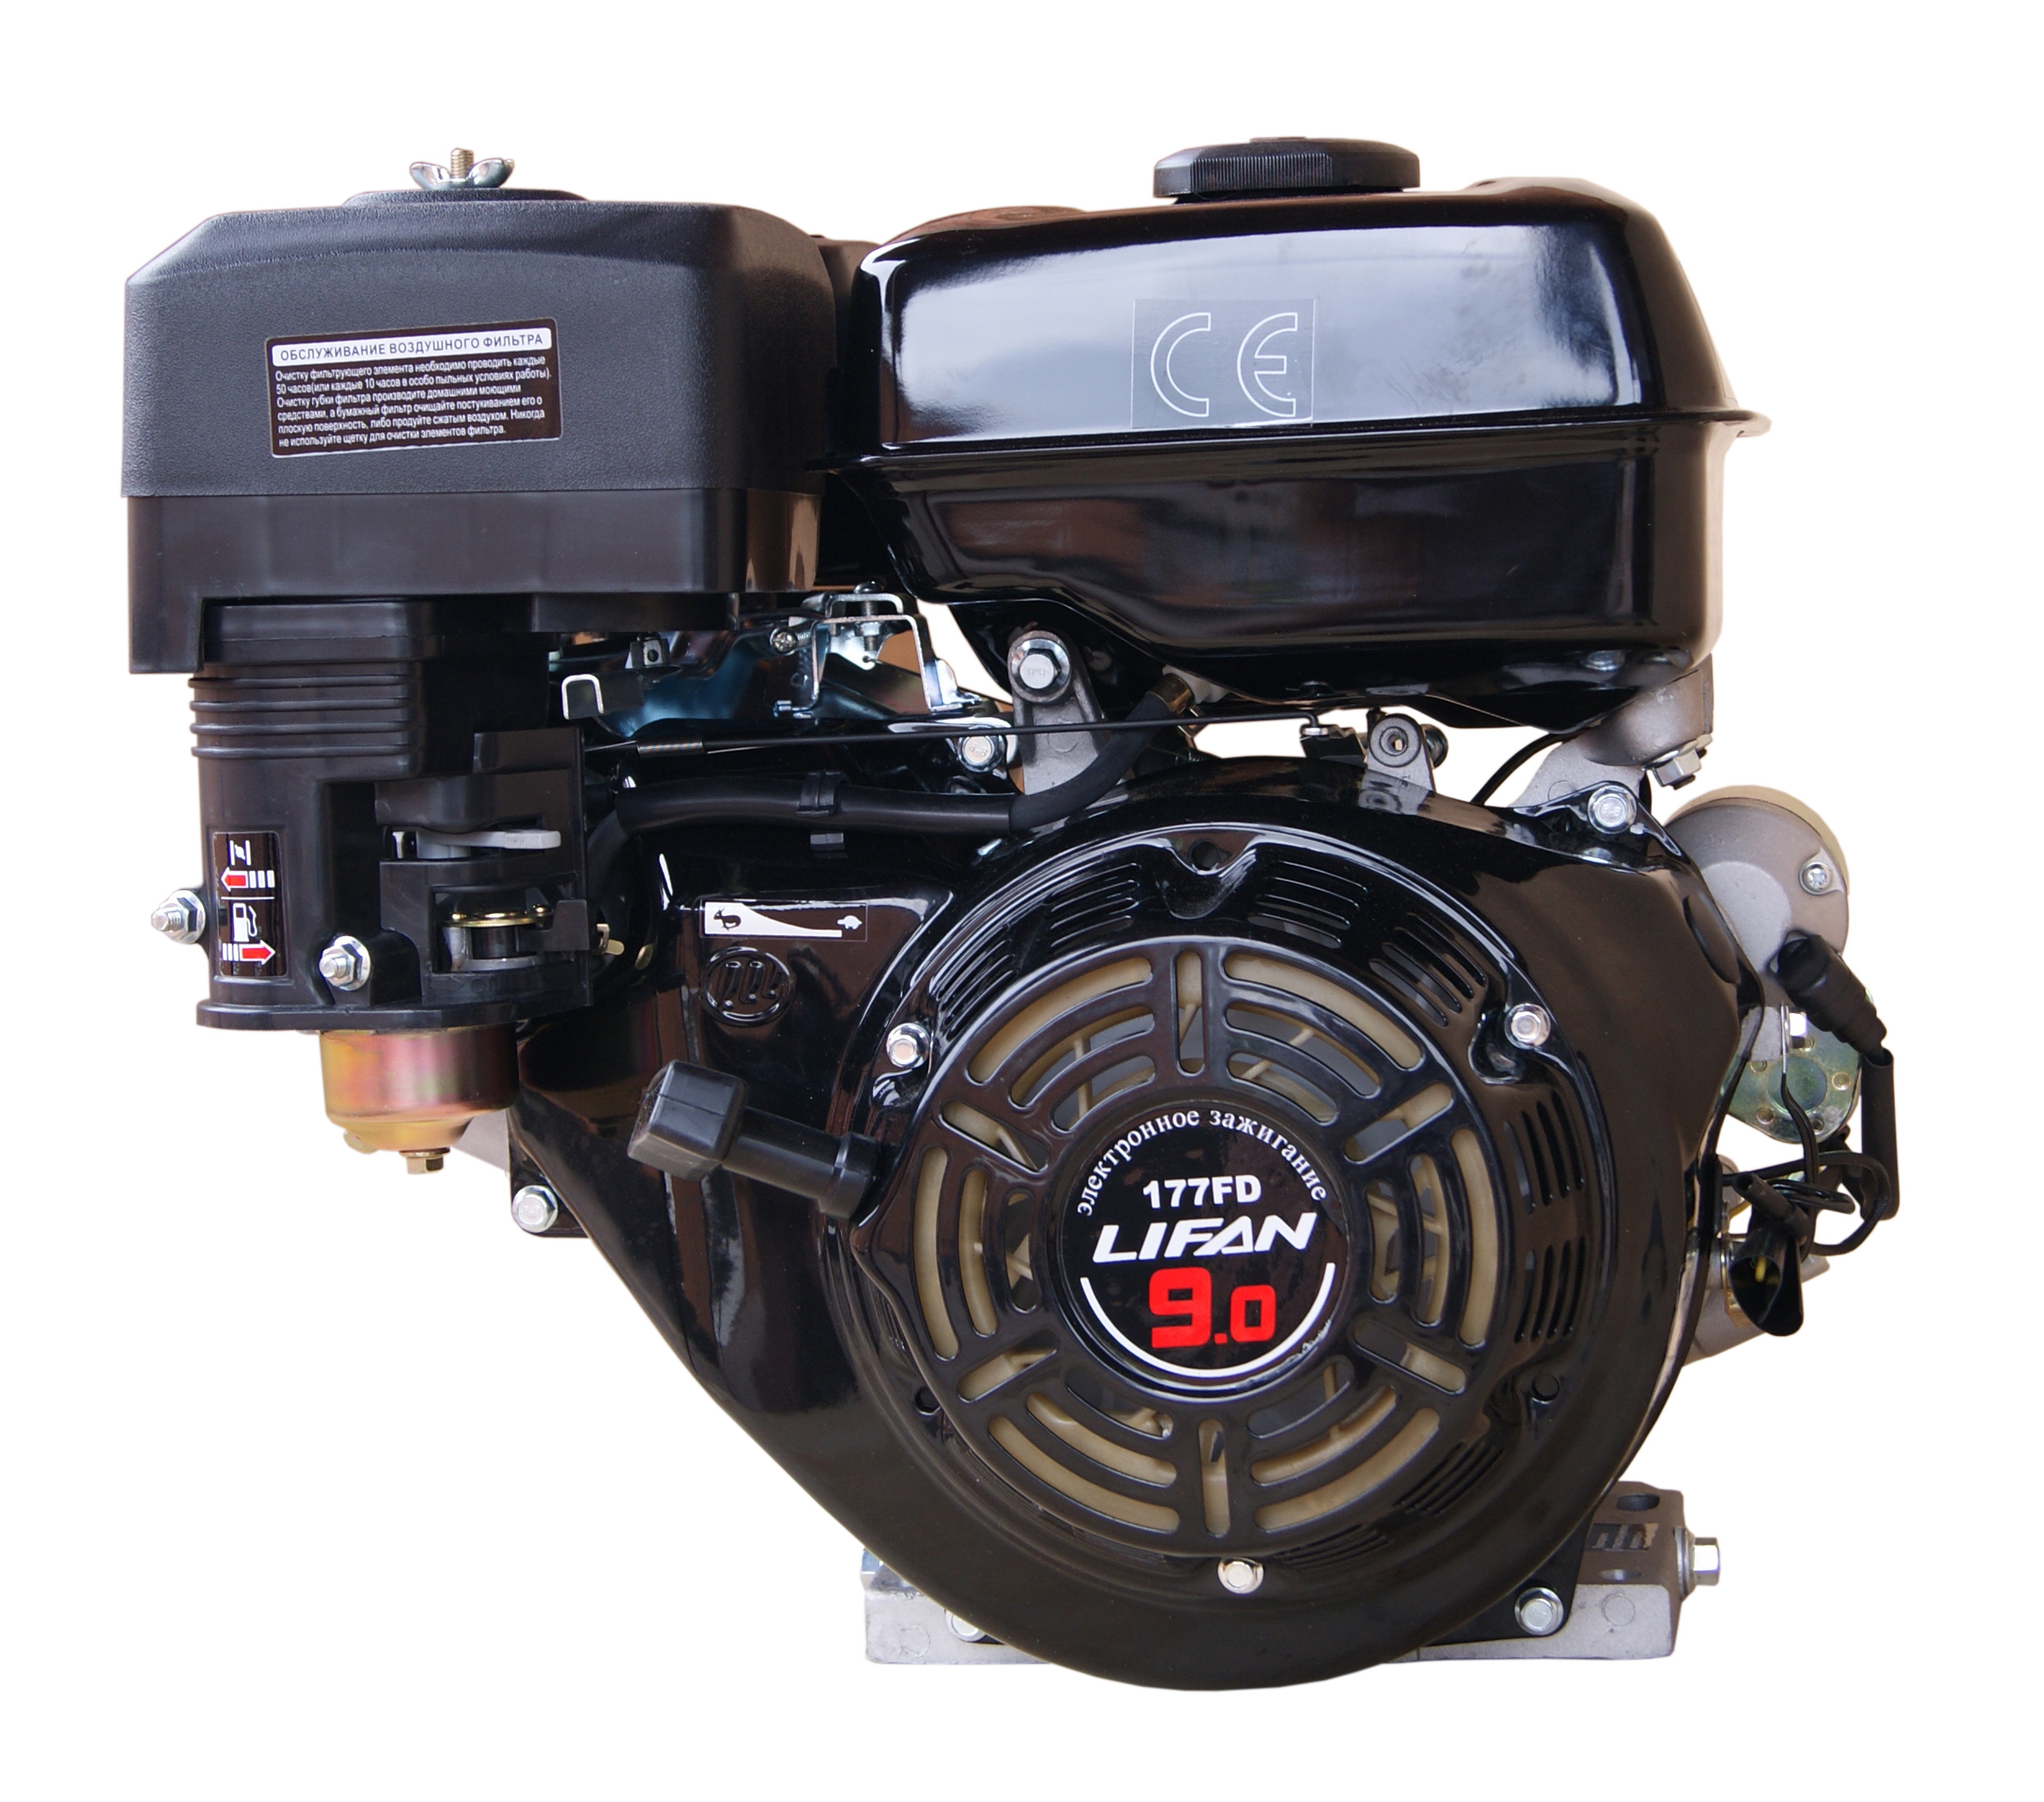 Купить двигатель лифан 9. Двигатель Lifan 177fd. Двигатель бензиновый Lifan 177f (9 л.с.). Лифан 177fd. Двигатель Лифан 177fd 9 л.с с электростартером.